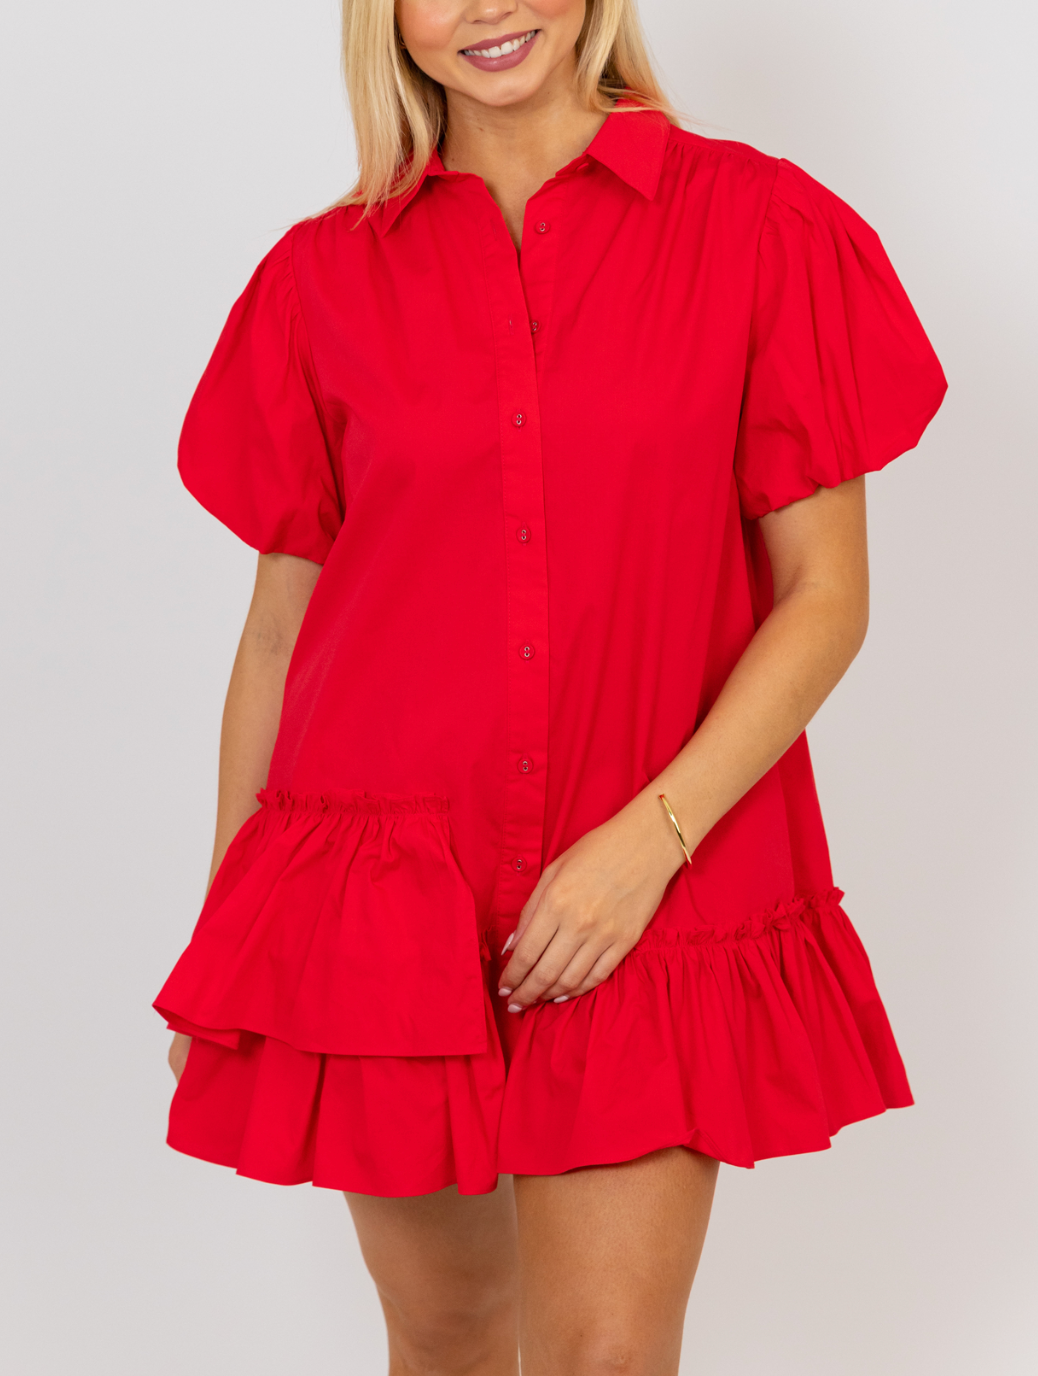 Poplin Ruffle Bottom Shirt Dress in Red by Karlie